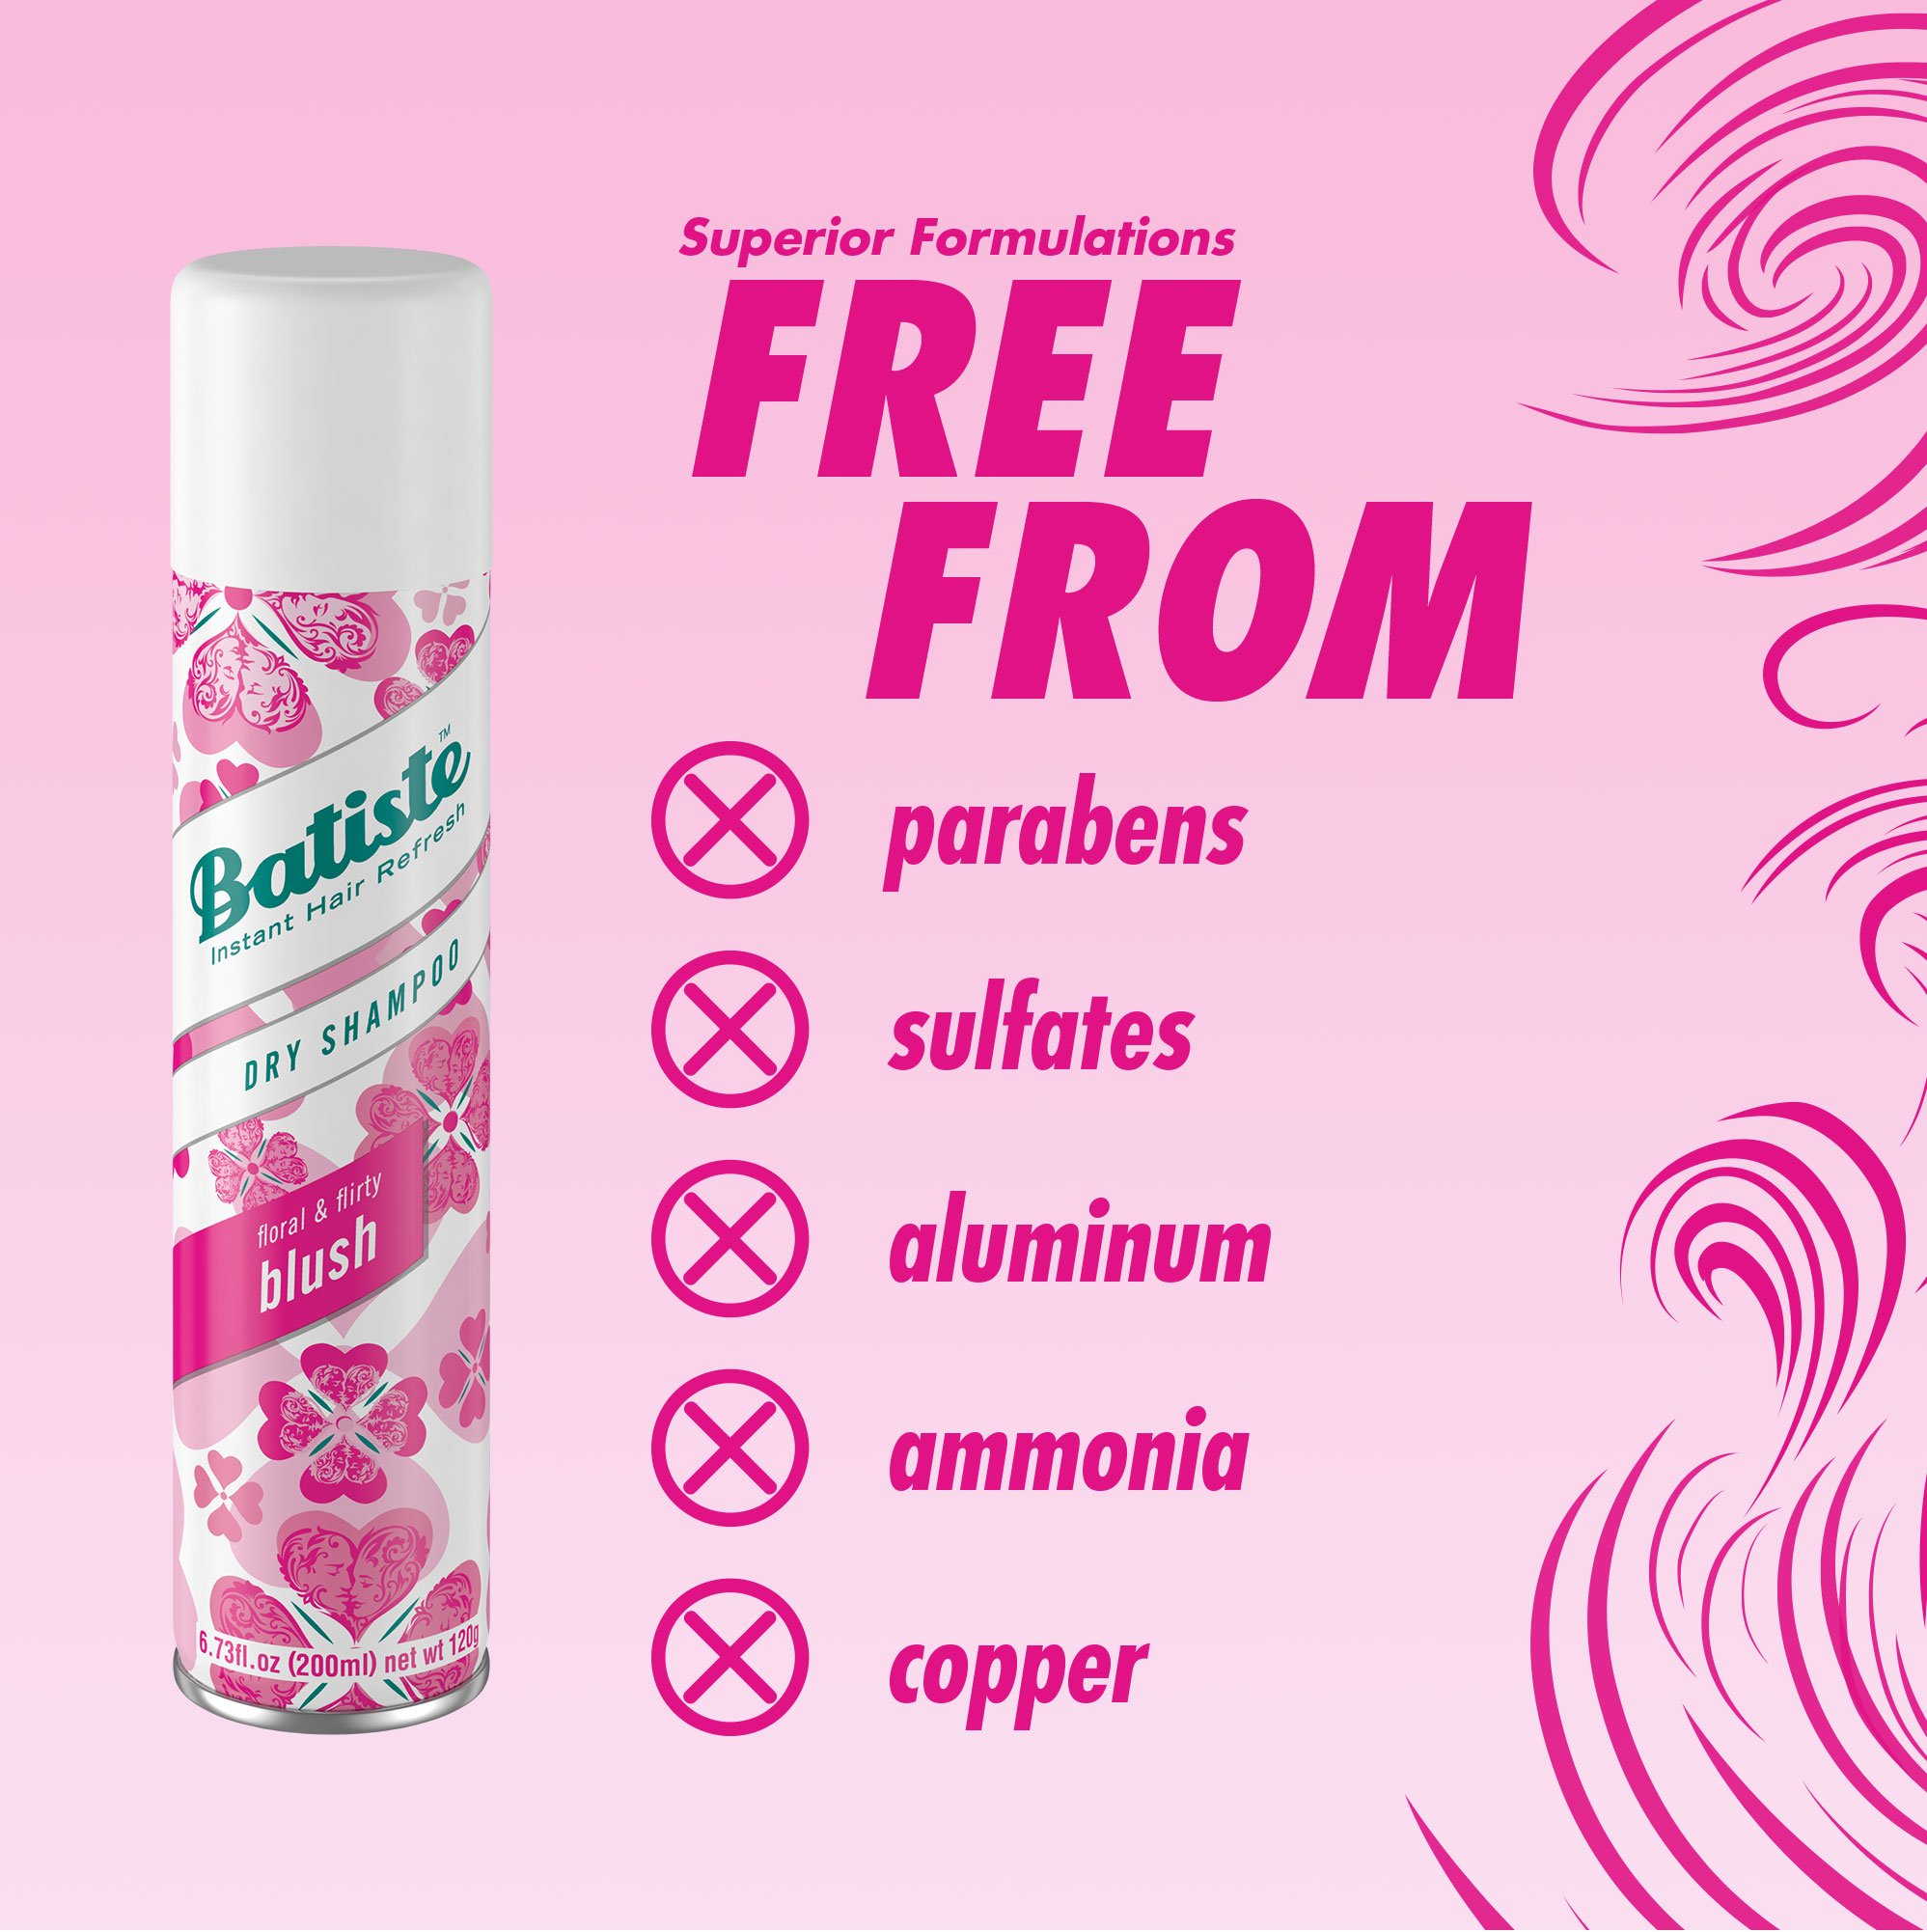 Batiste Dry Shampoo Floral&Flirty Blush 200ml